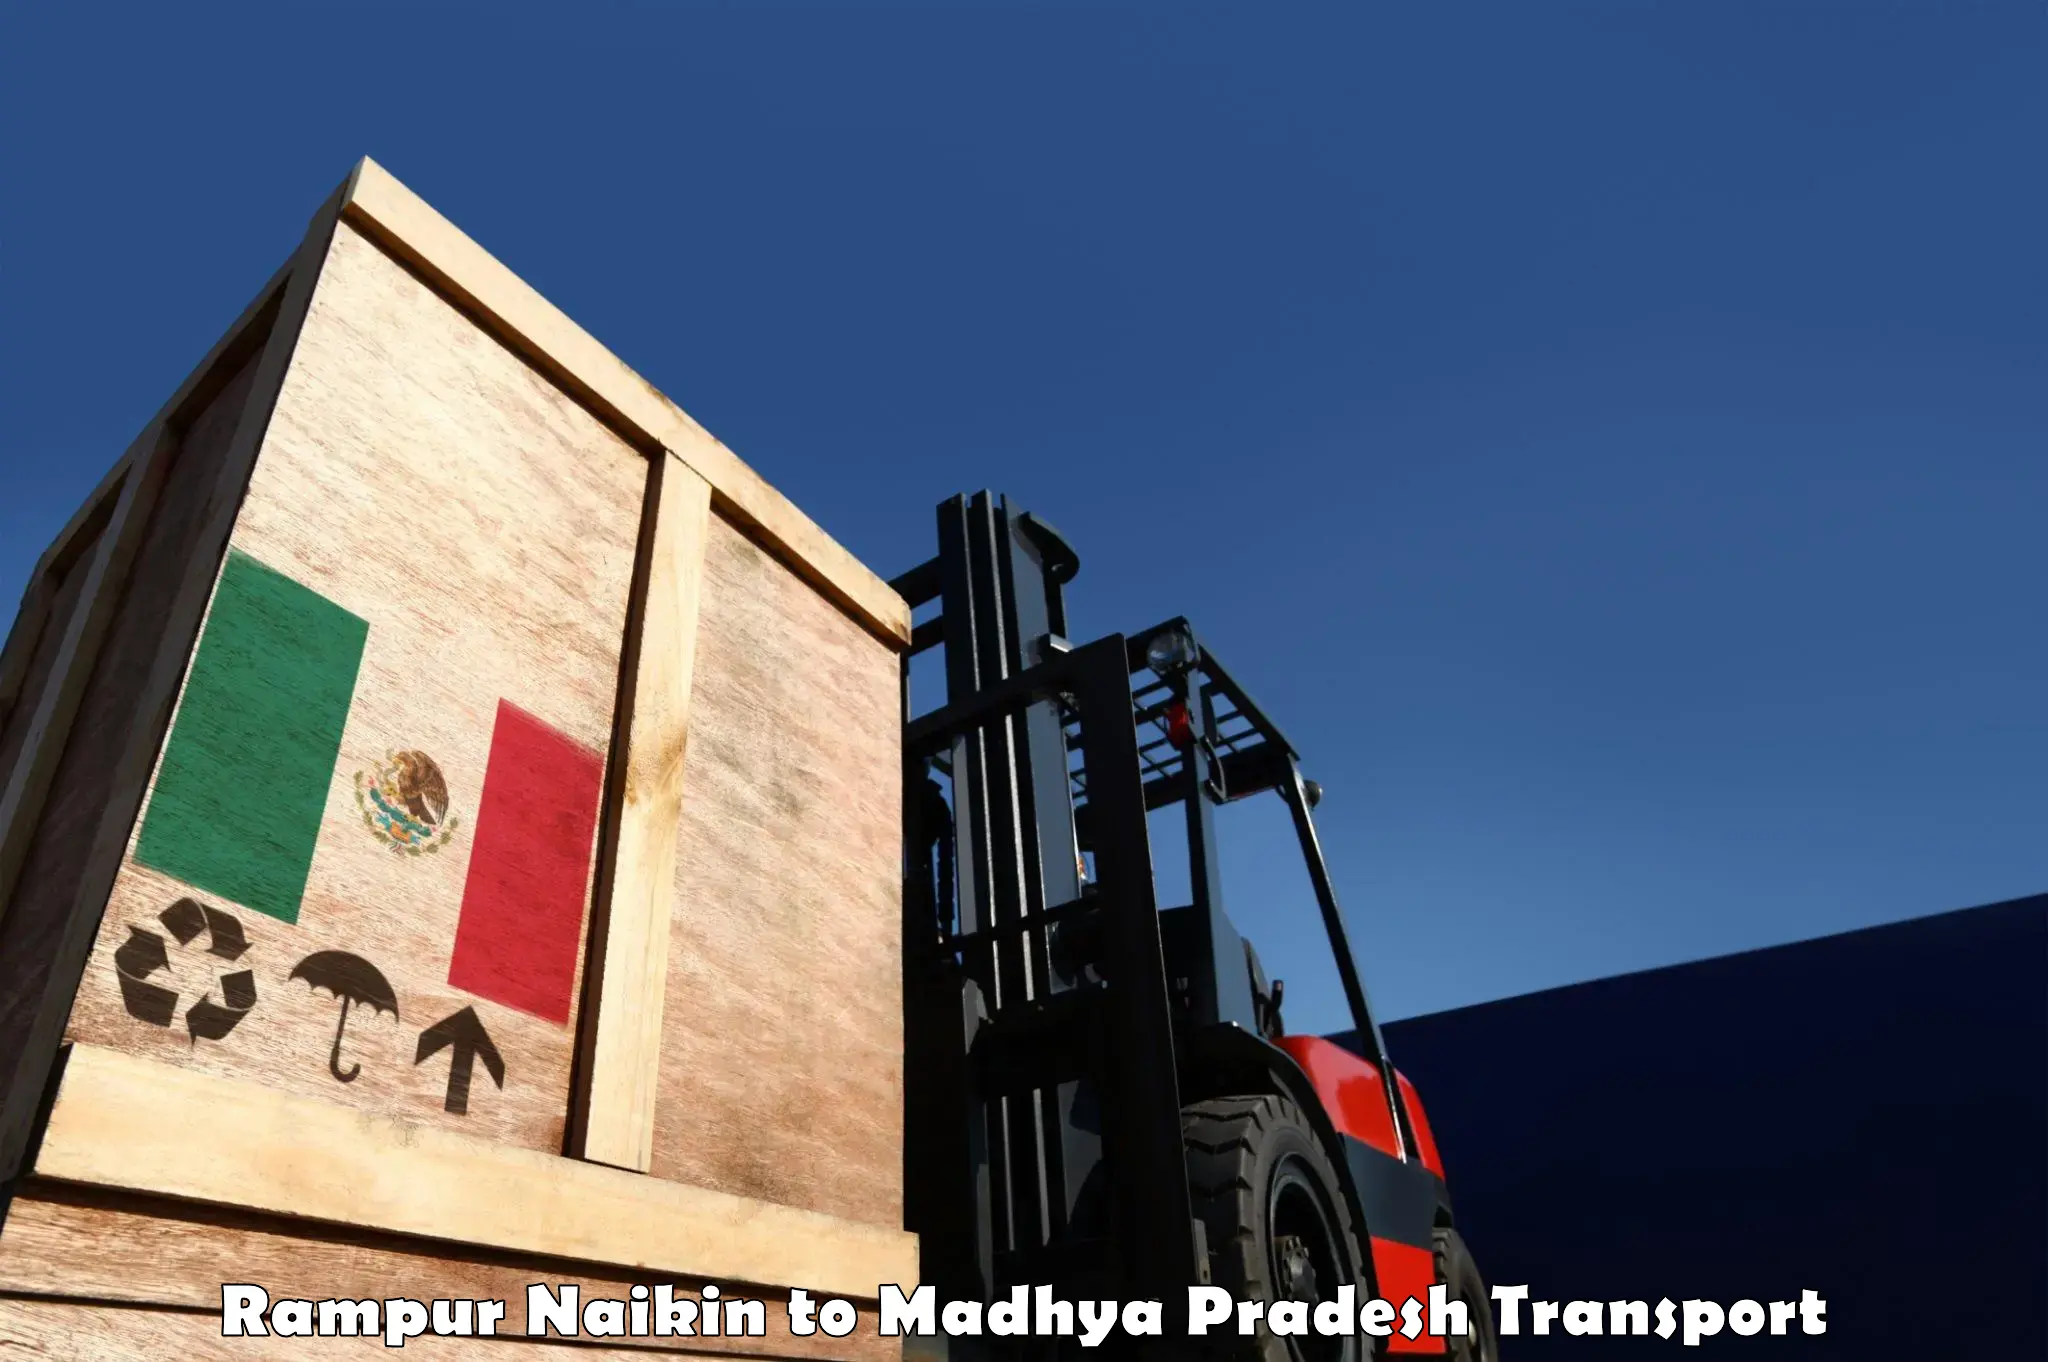 Transportation solution services in Rampur Naikin to Nainpur